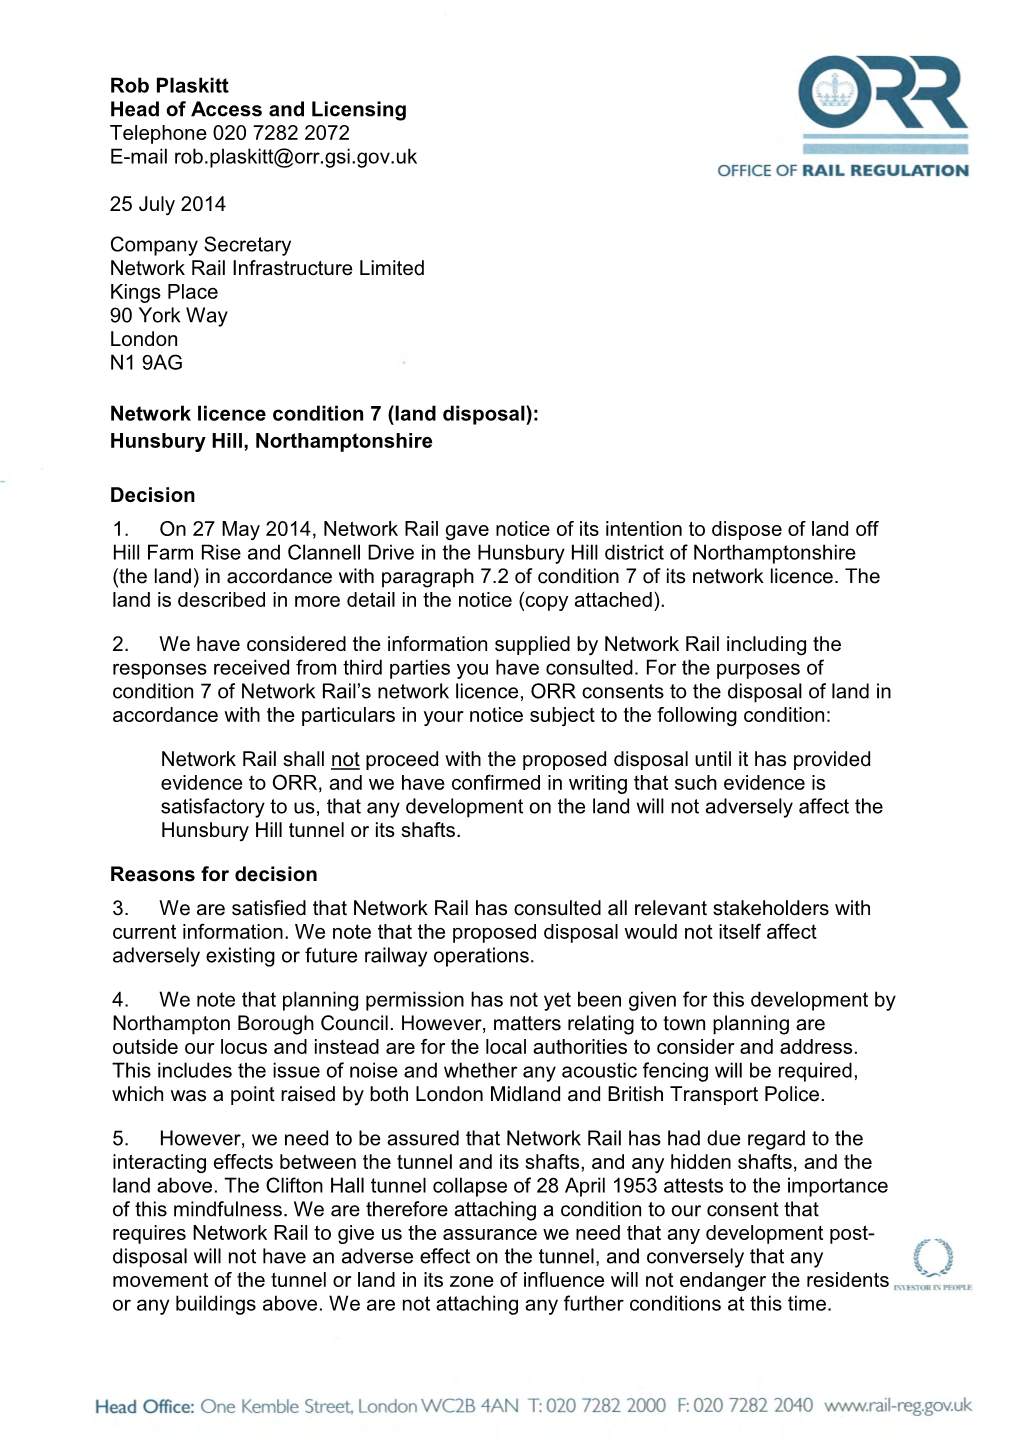 C7 Land Disposal Decision Document. Hunsbury Hill Northamptonshire